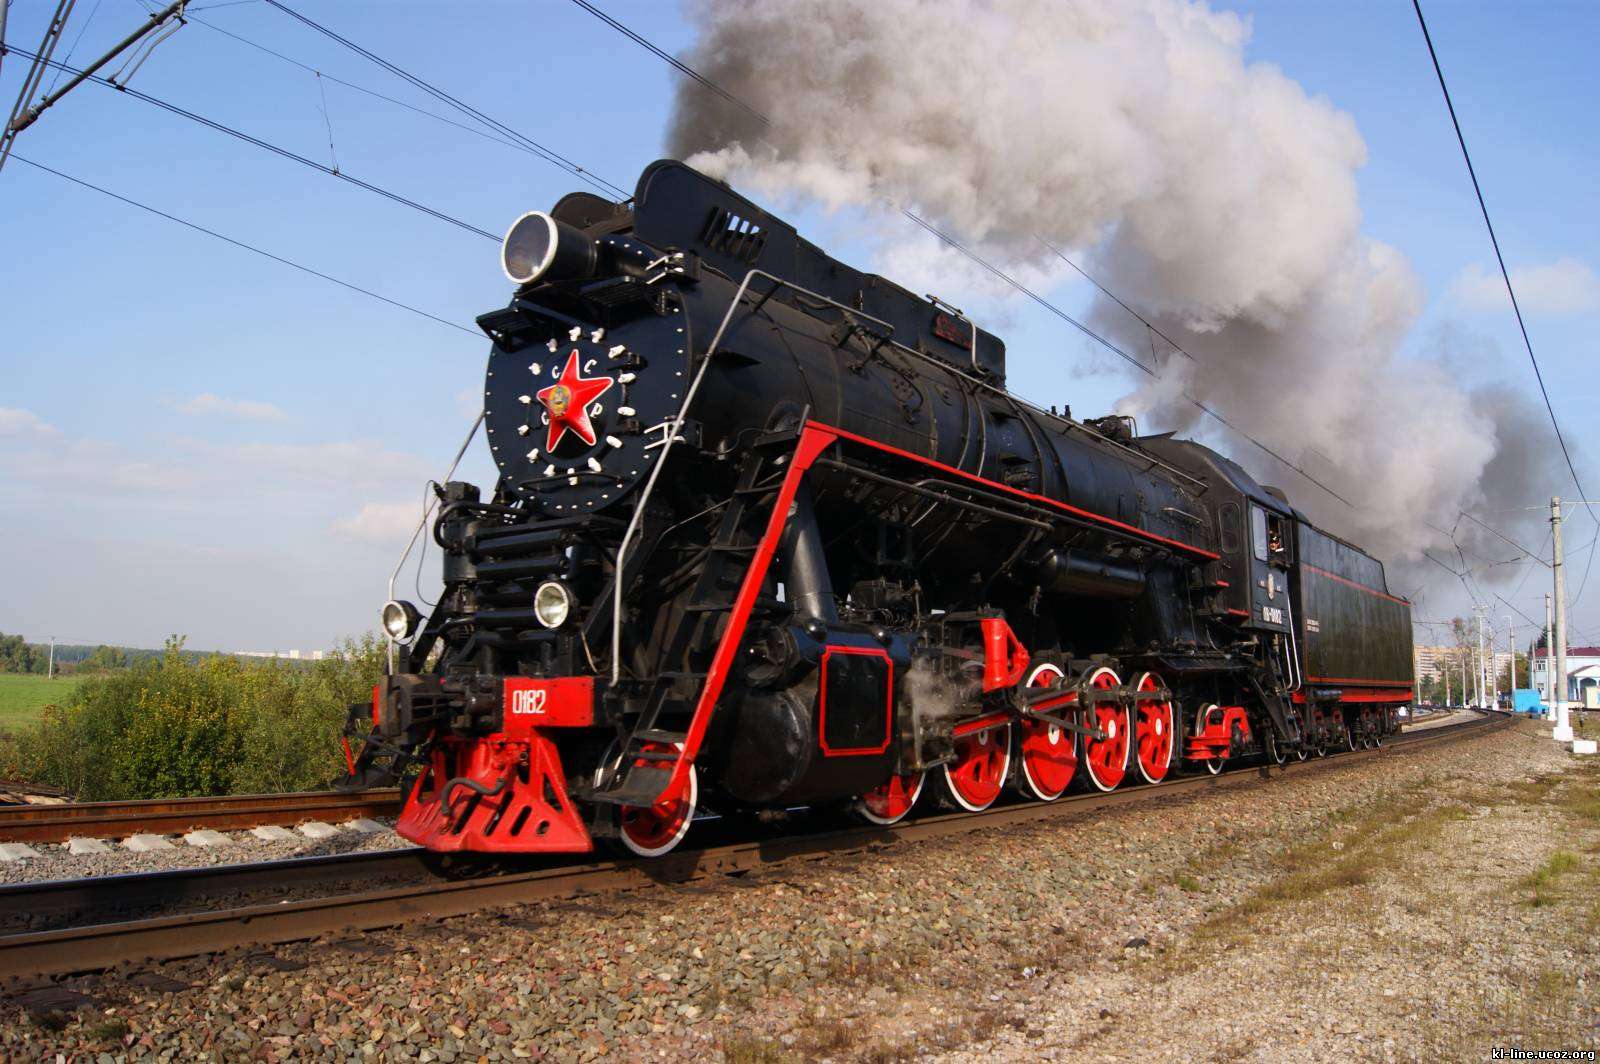 locomotora LV-0182 puzzle online a partir de foto